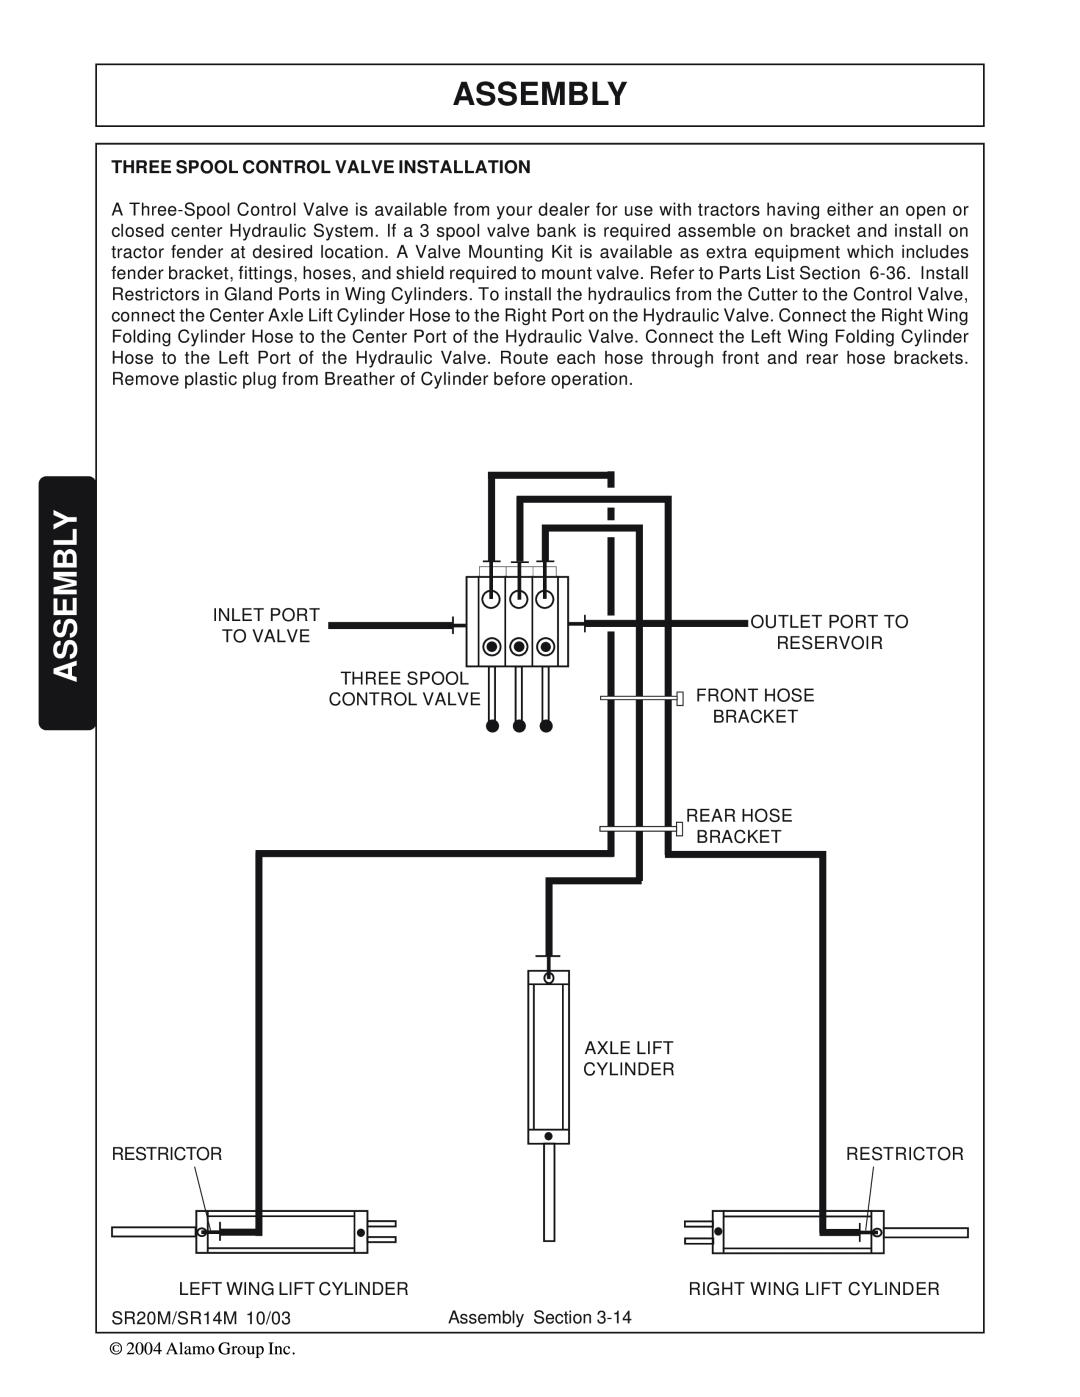 Alamo SR20, SR14 manual Assembly, Three Spool Control Valve Installation 